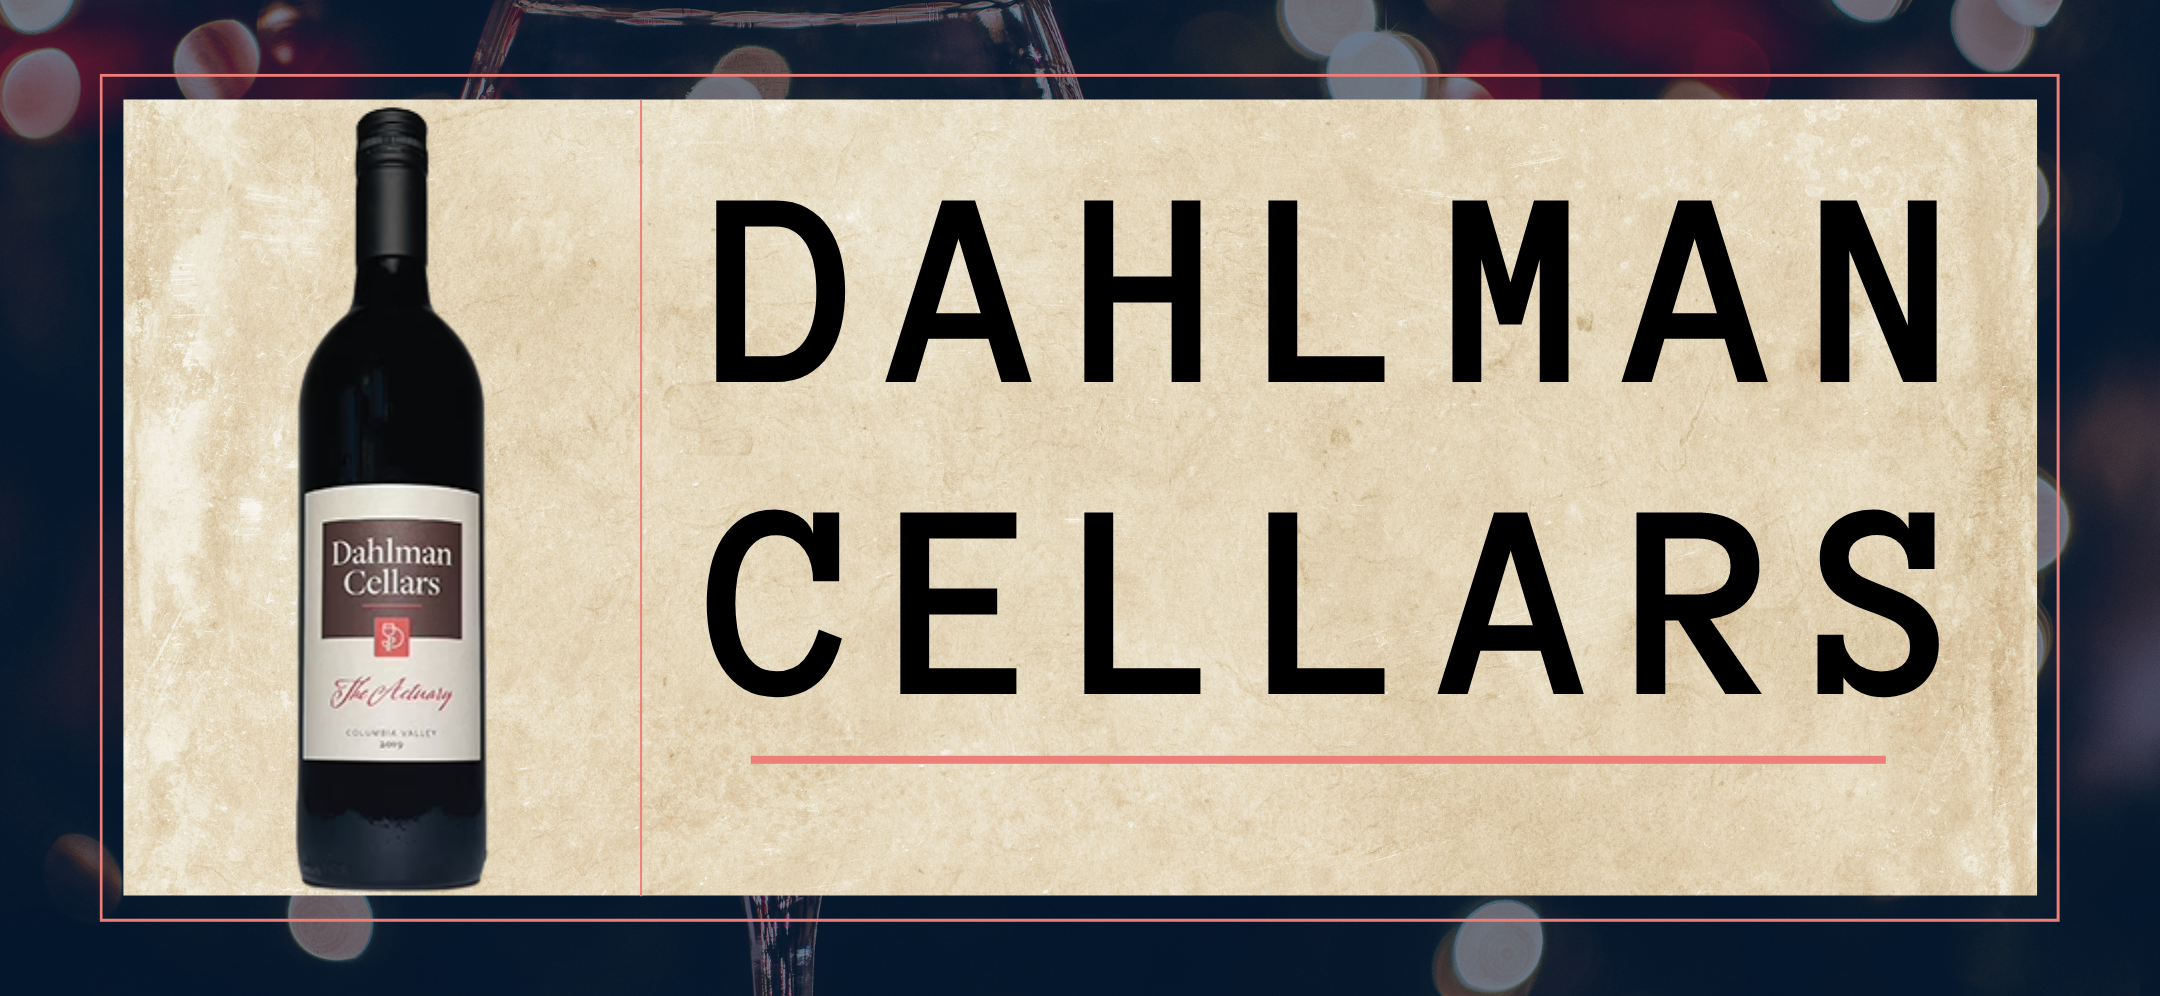 Dahlman Cellars Wine review by Windermere Mill Creek